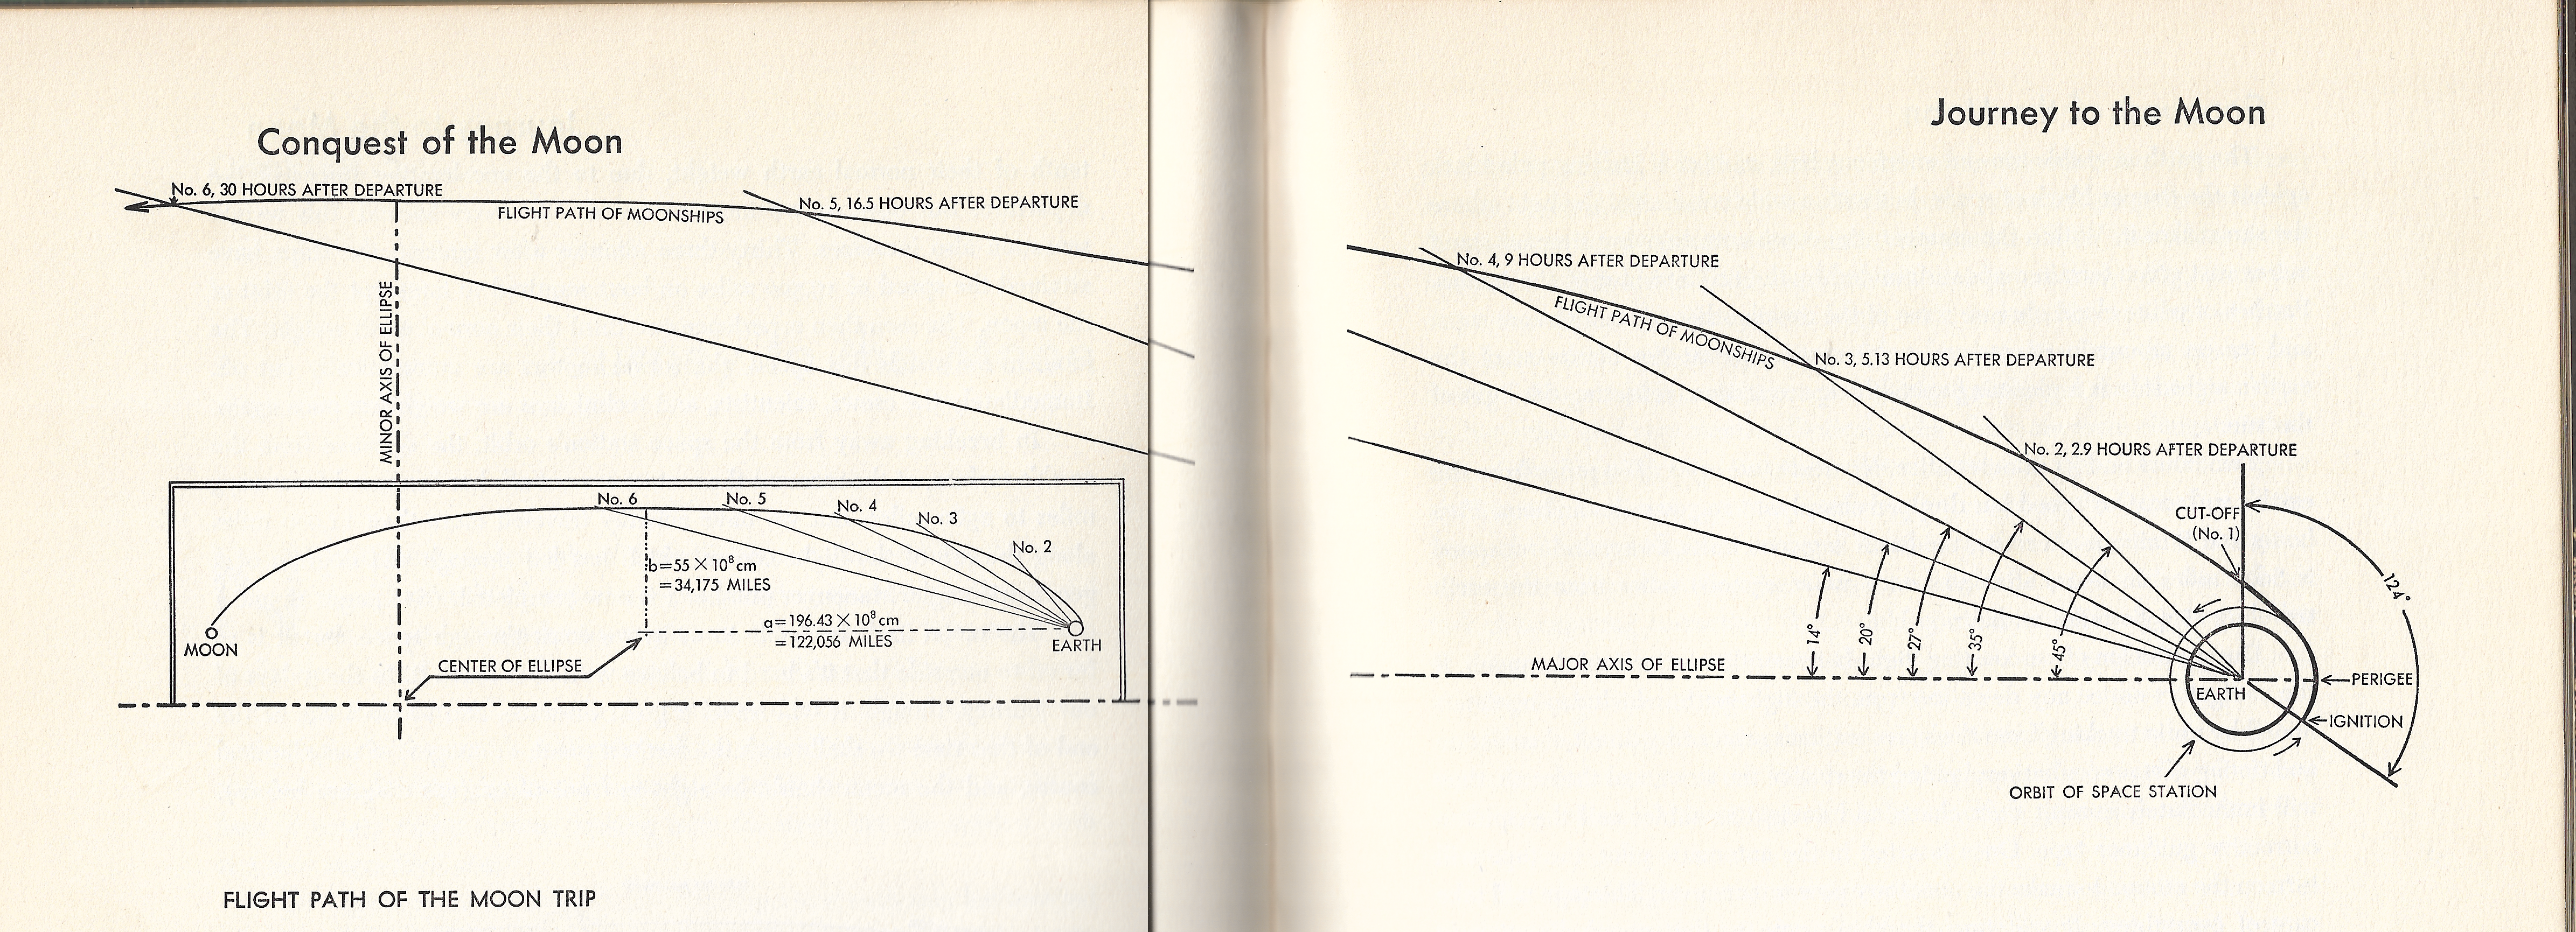 cis-lunar orbit, with navigation notes